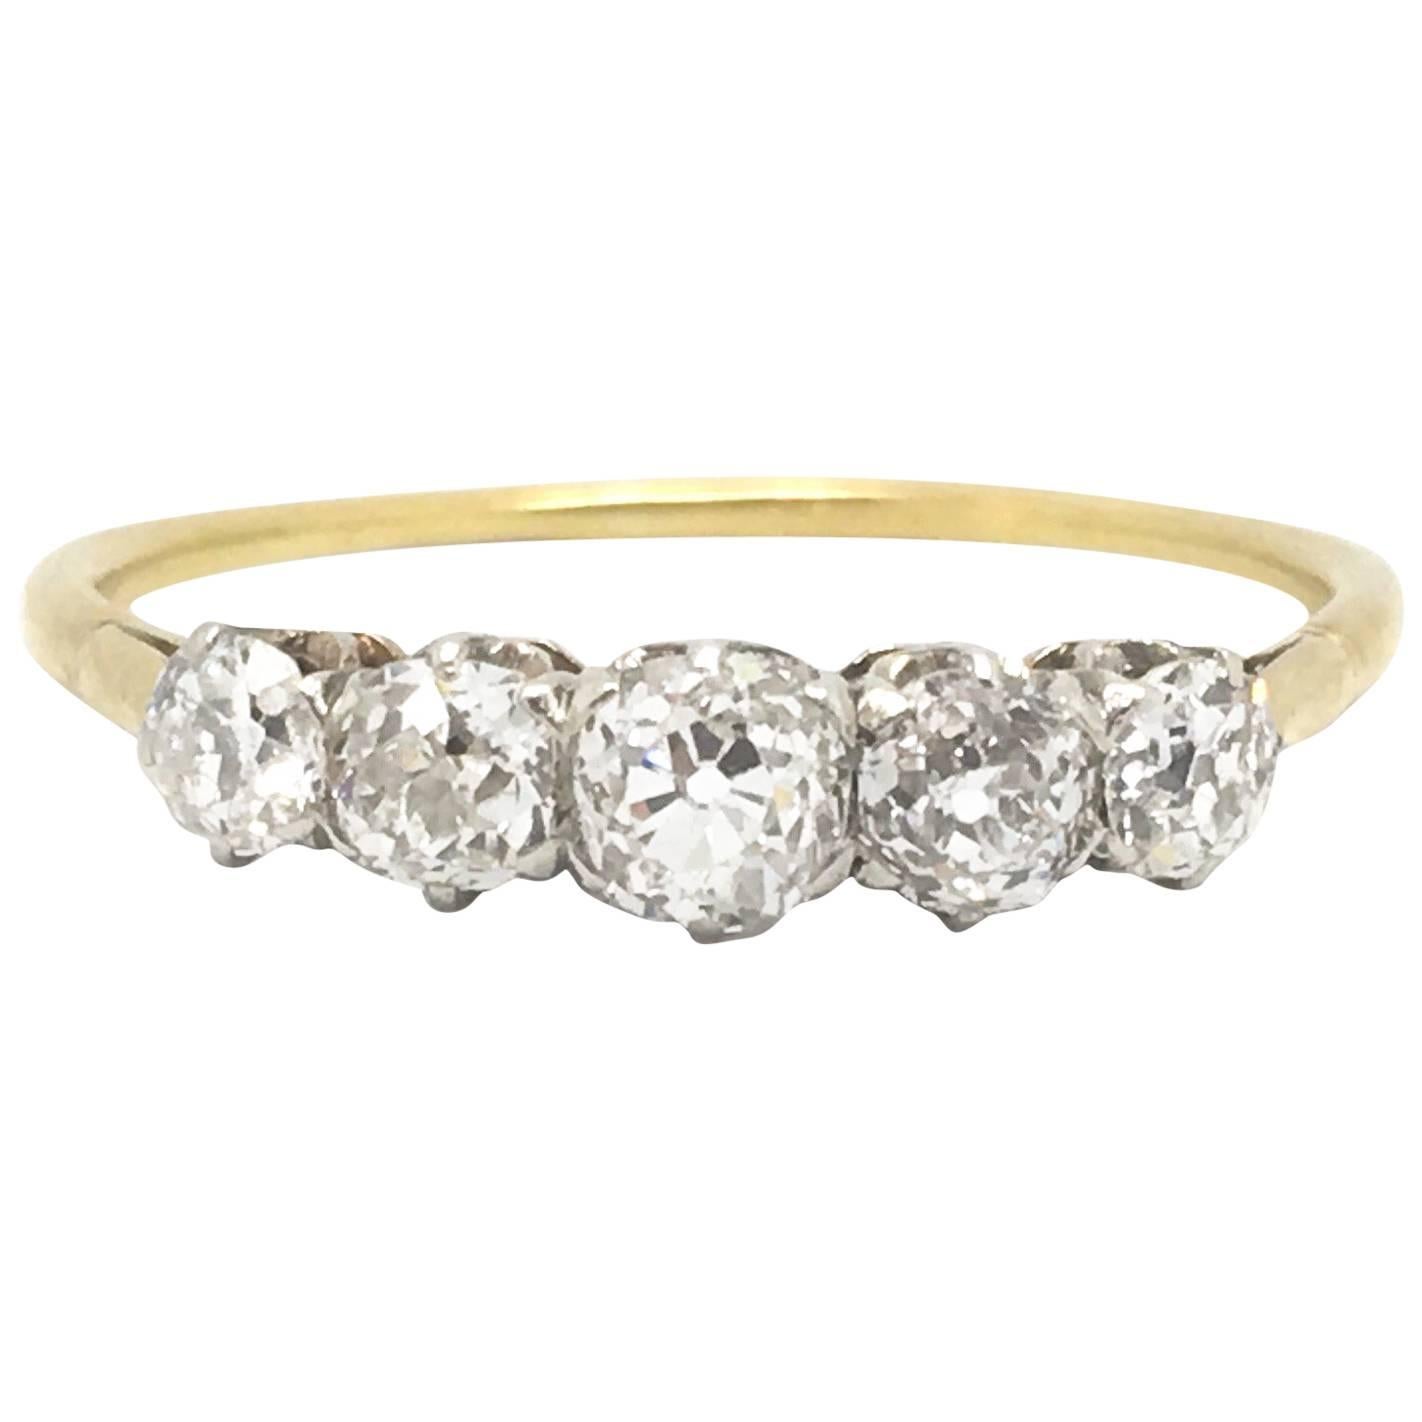 Edwardian 18 Carat and Platinum Five-Stone Old Cut Diamond Ring